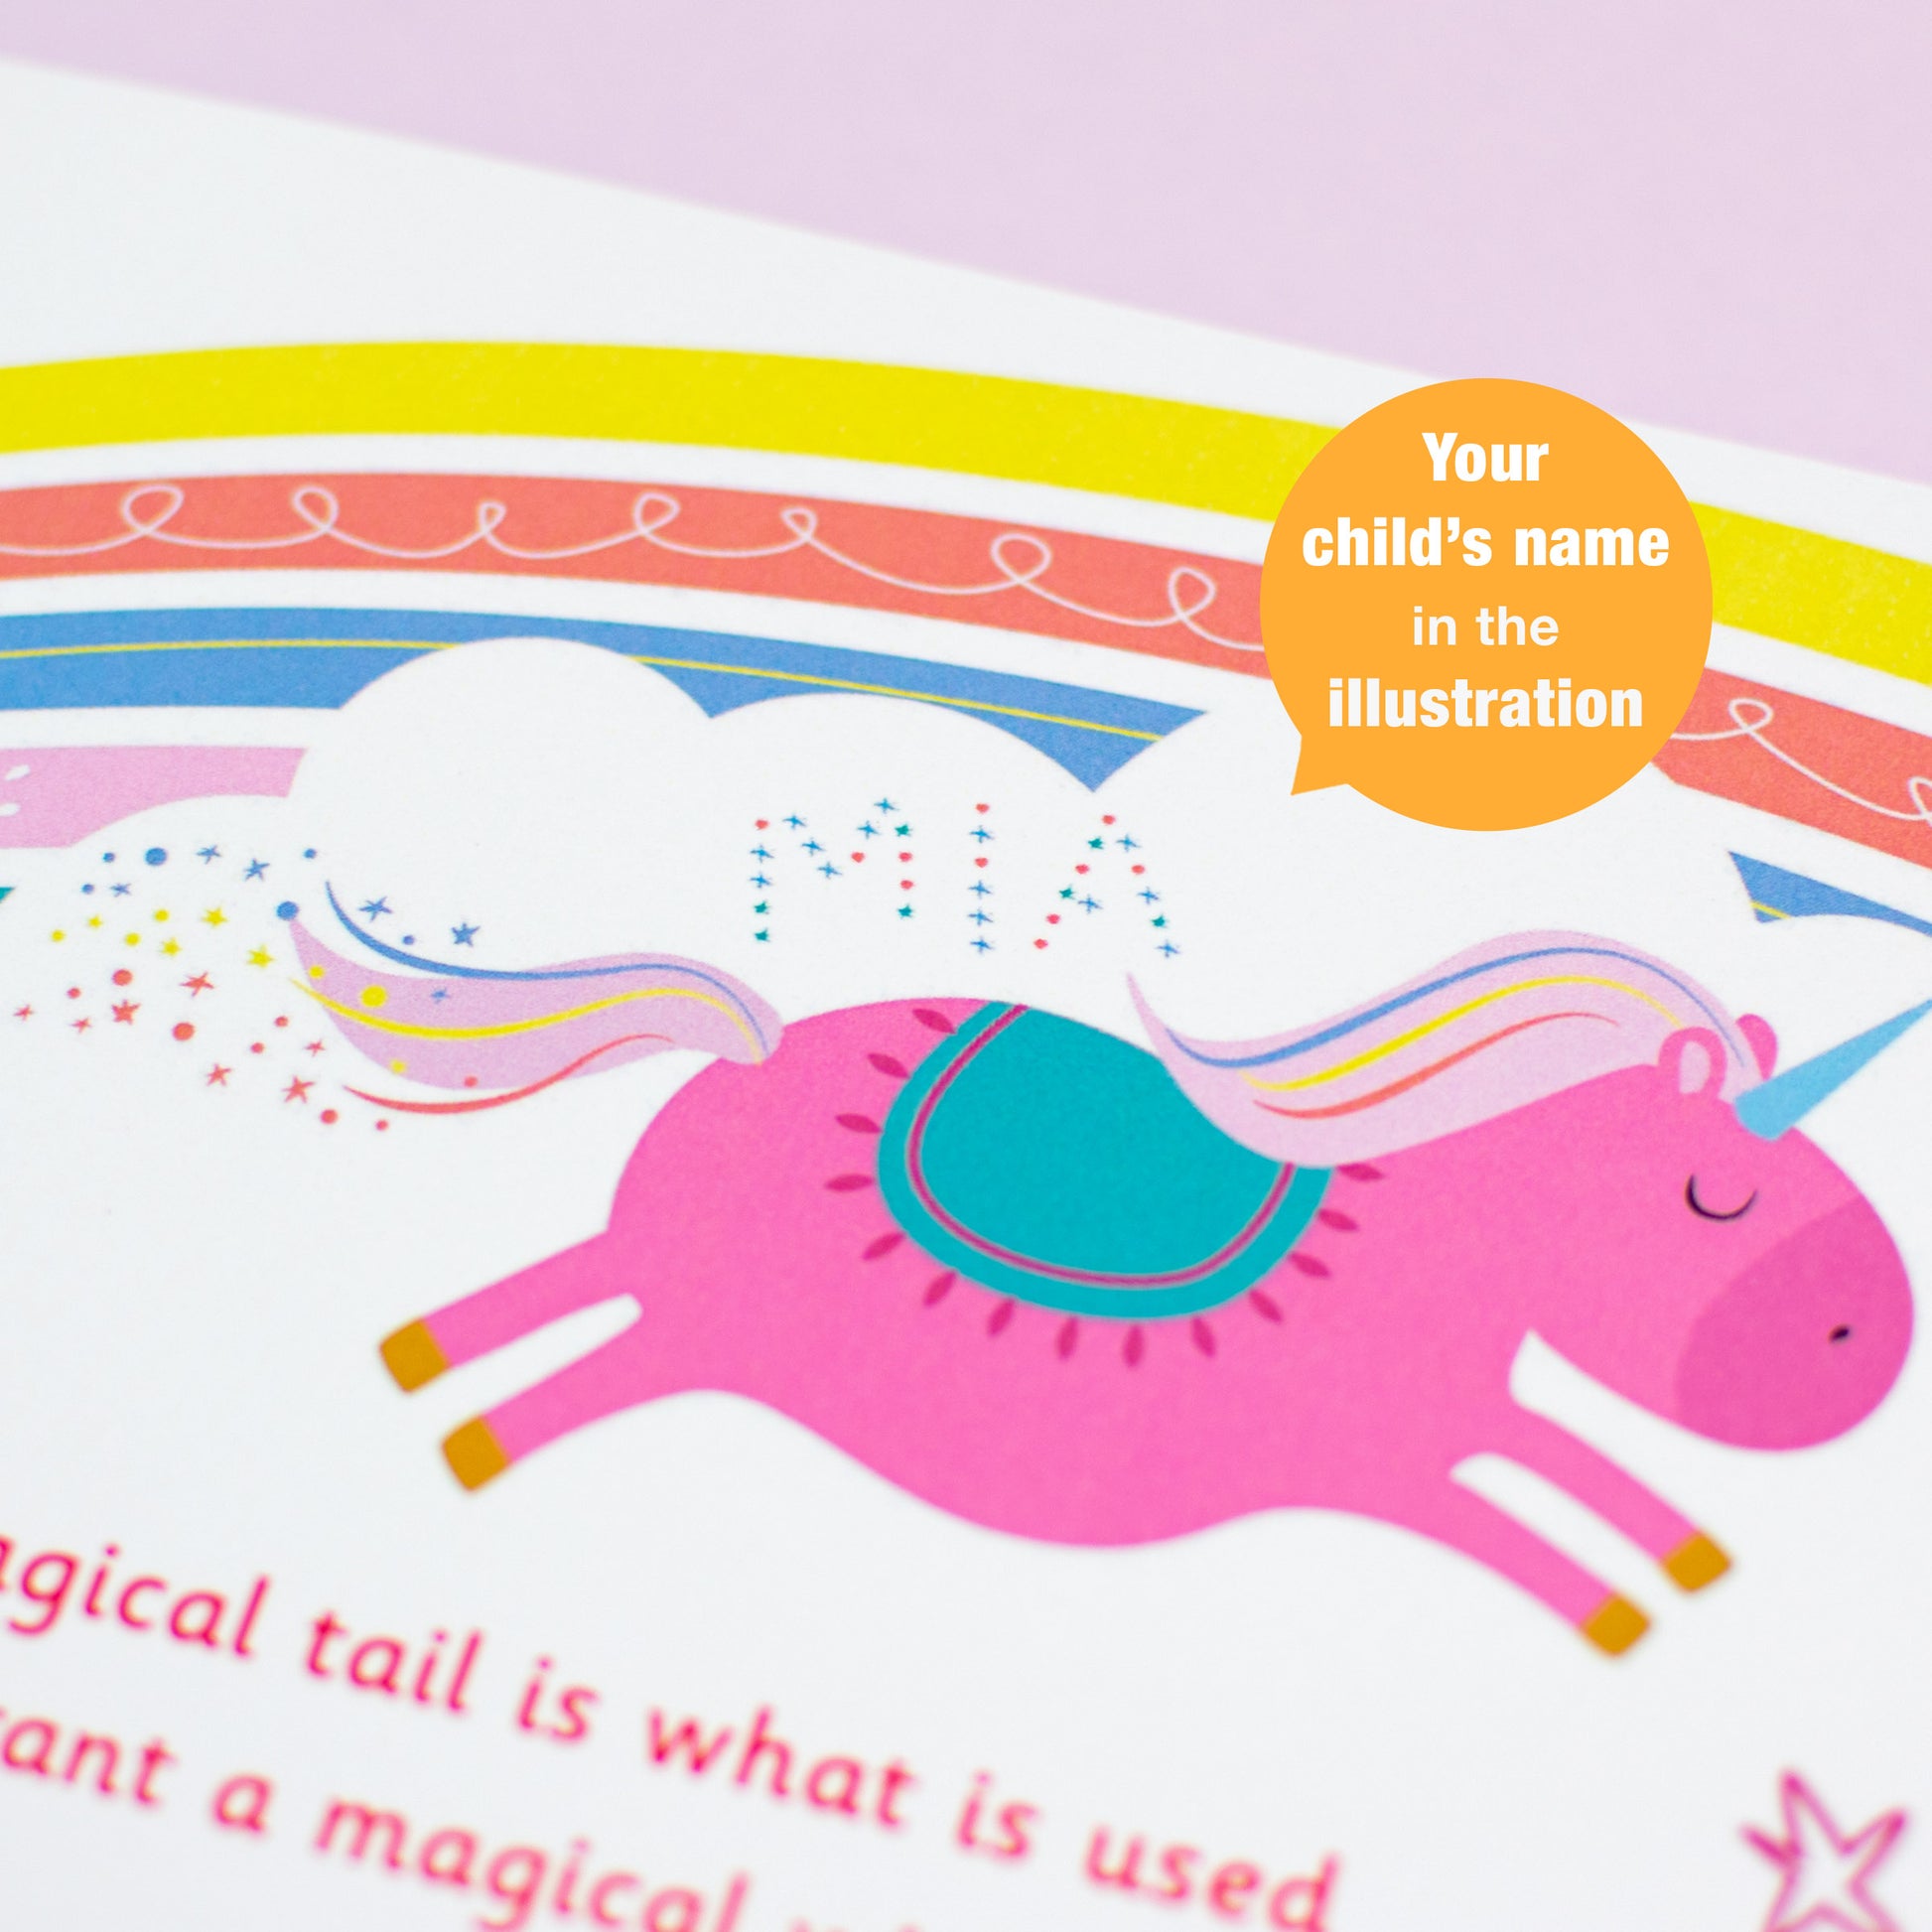 Personalised Unicorn Board Book